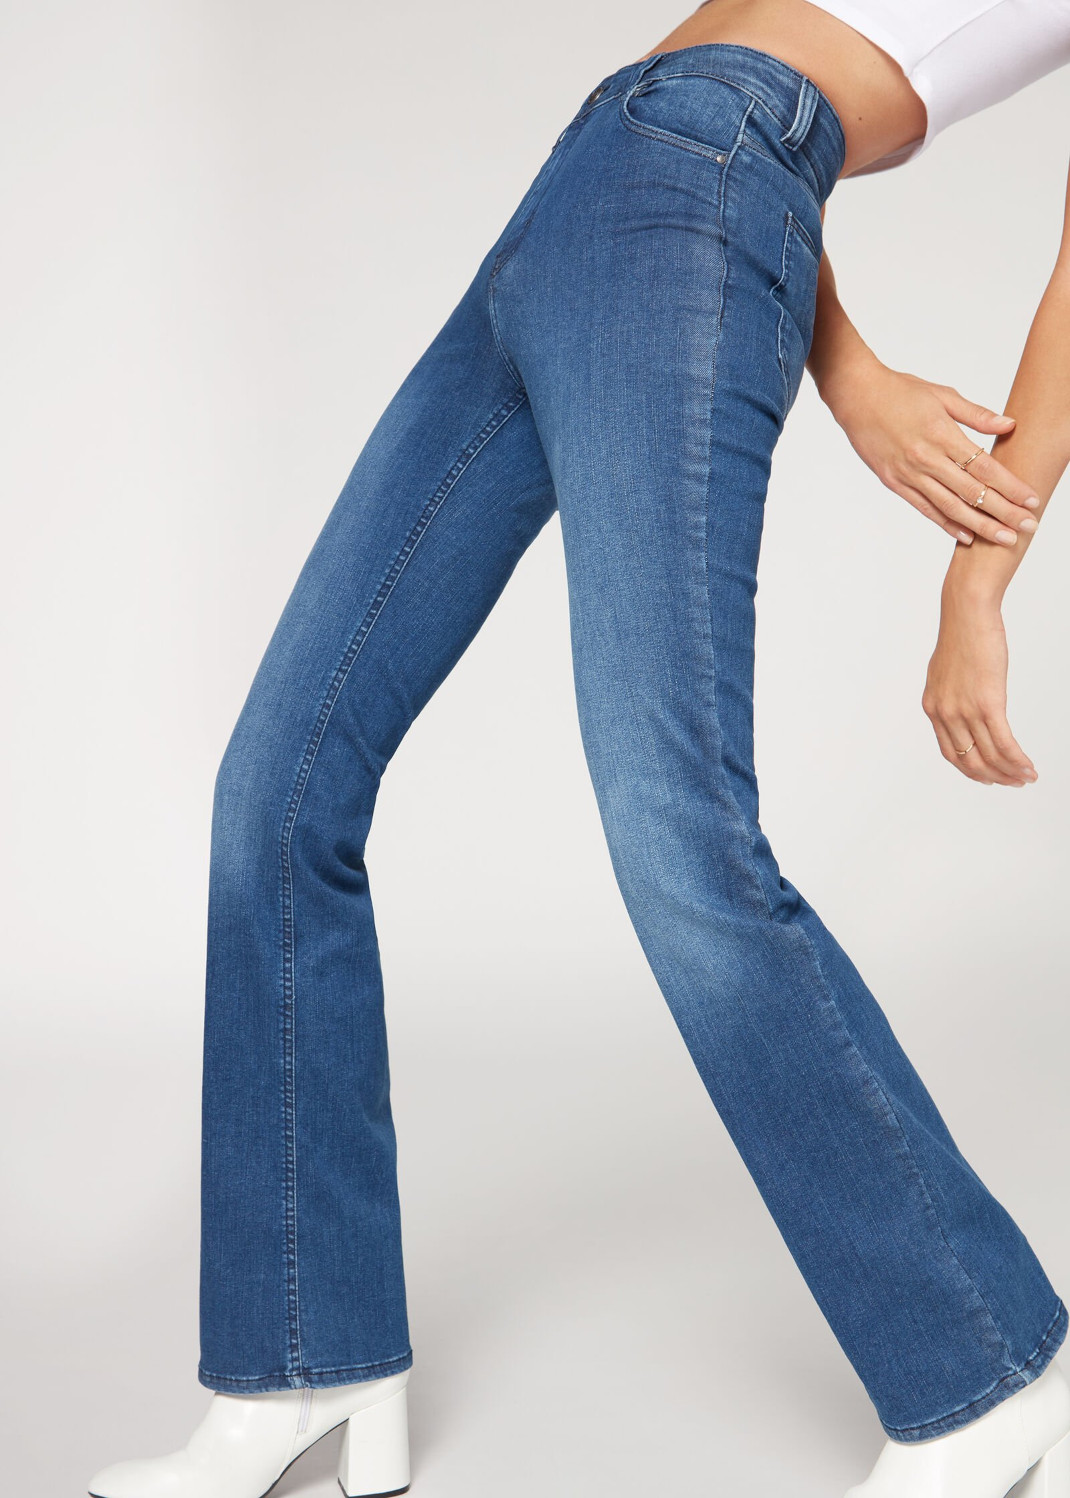 Casual chic: Η Τόνια Σωτηροπούλου με skinny jean από τα Calzedonia, λευκό T-shirt και loafers